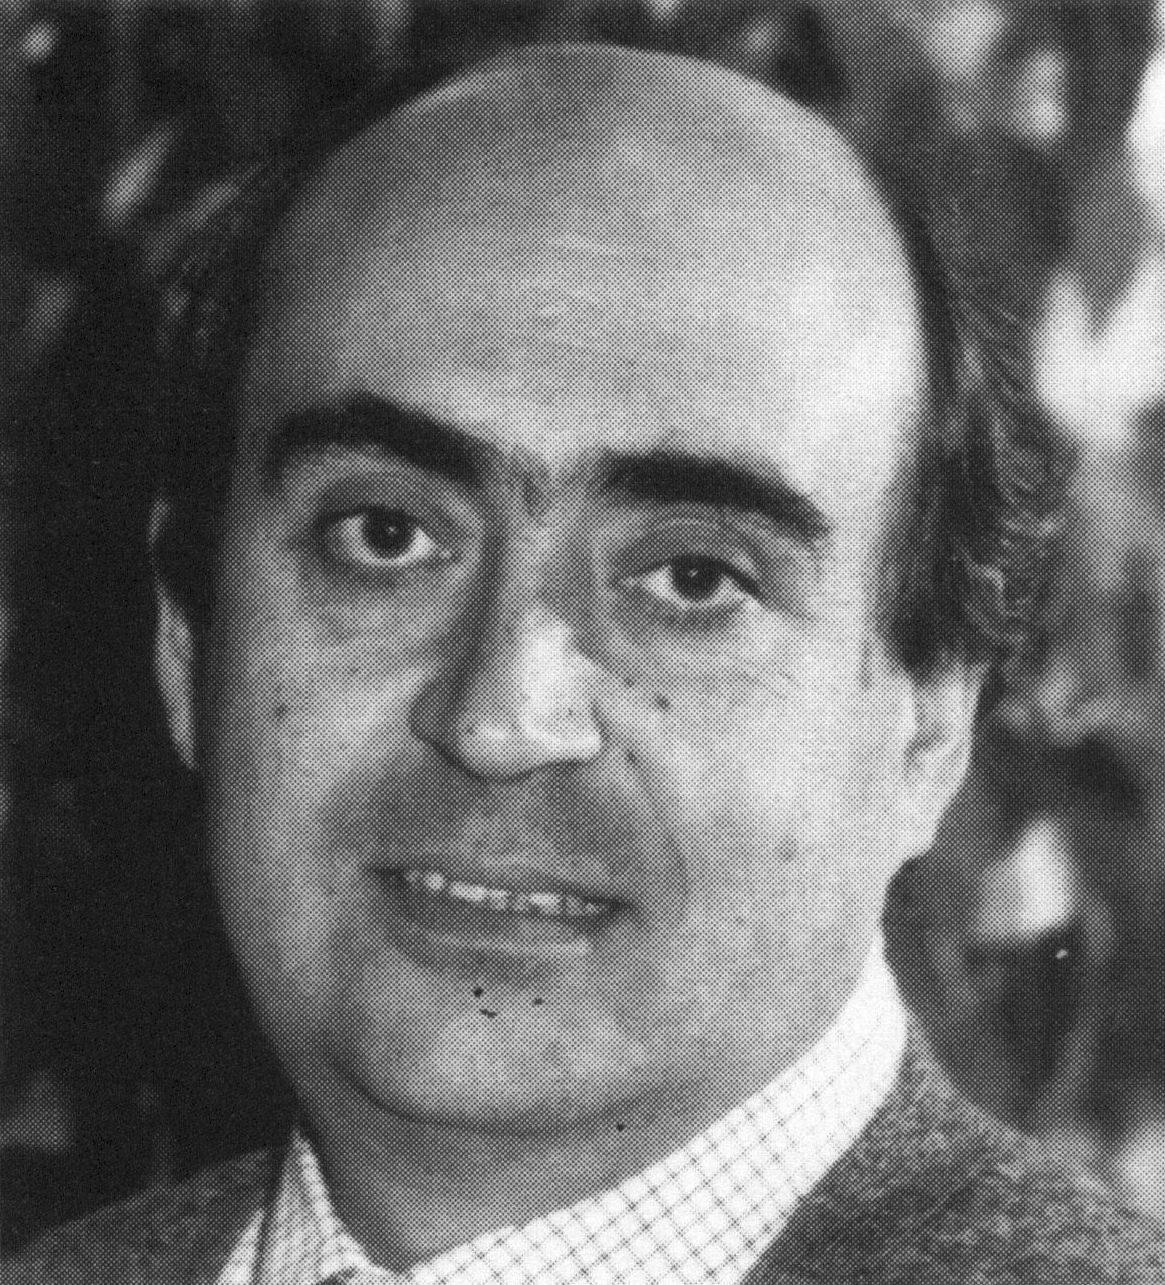 Miguel Ángel Prieto Echegaray